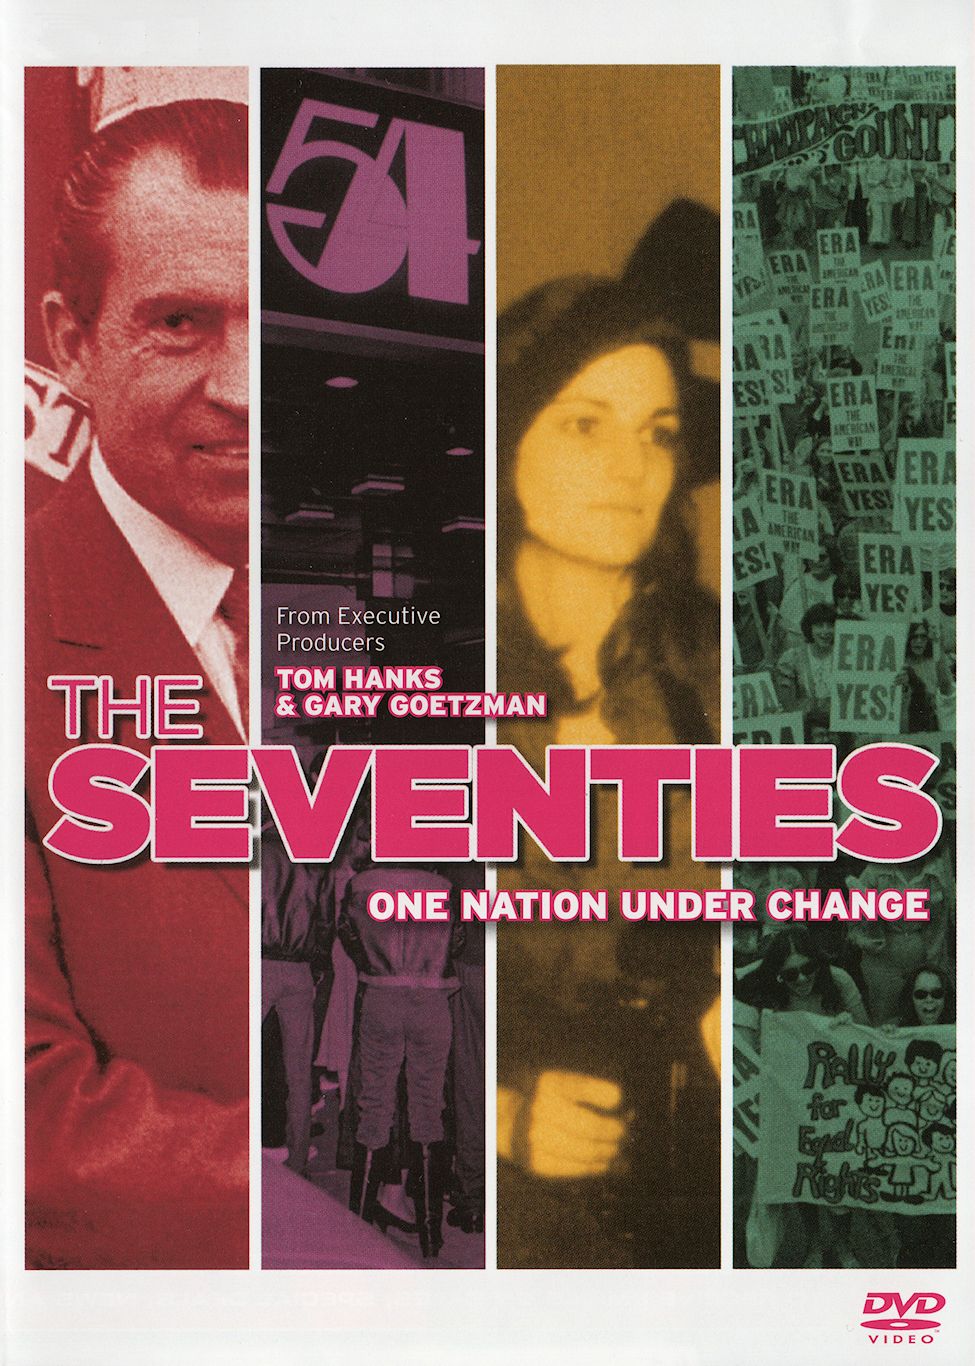 The Seventies Battle of the Sexes (TV Episode 2015) - IMDb